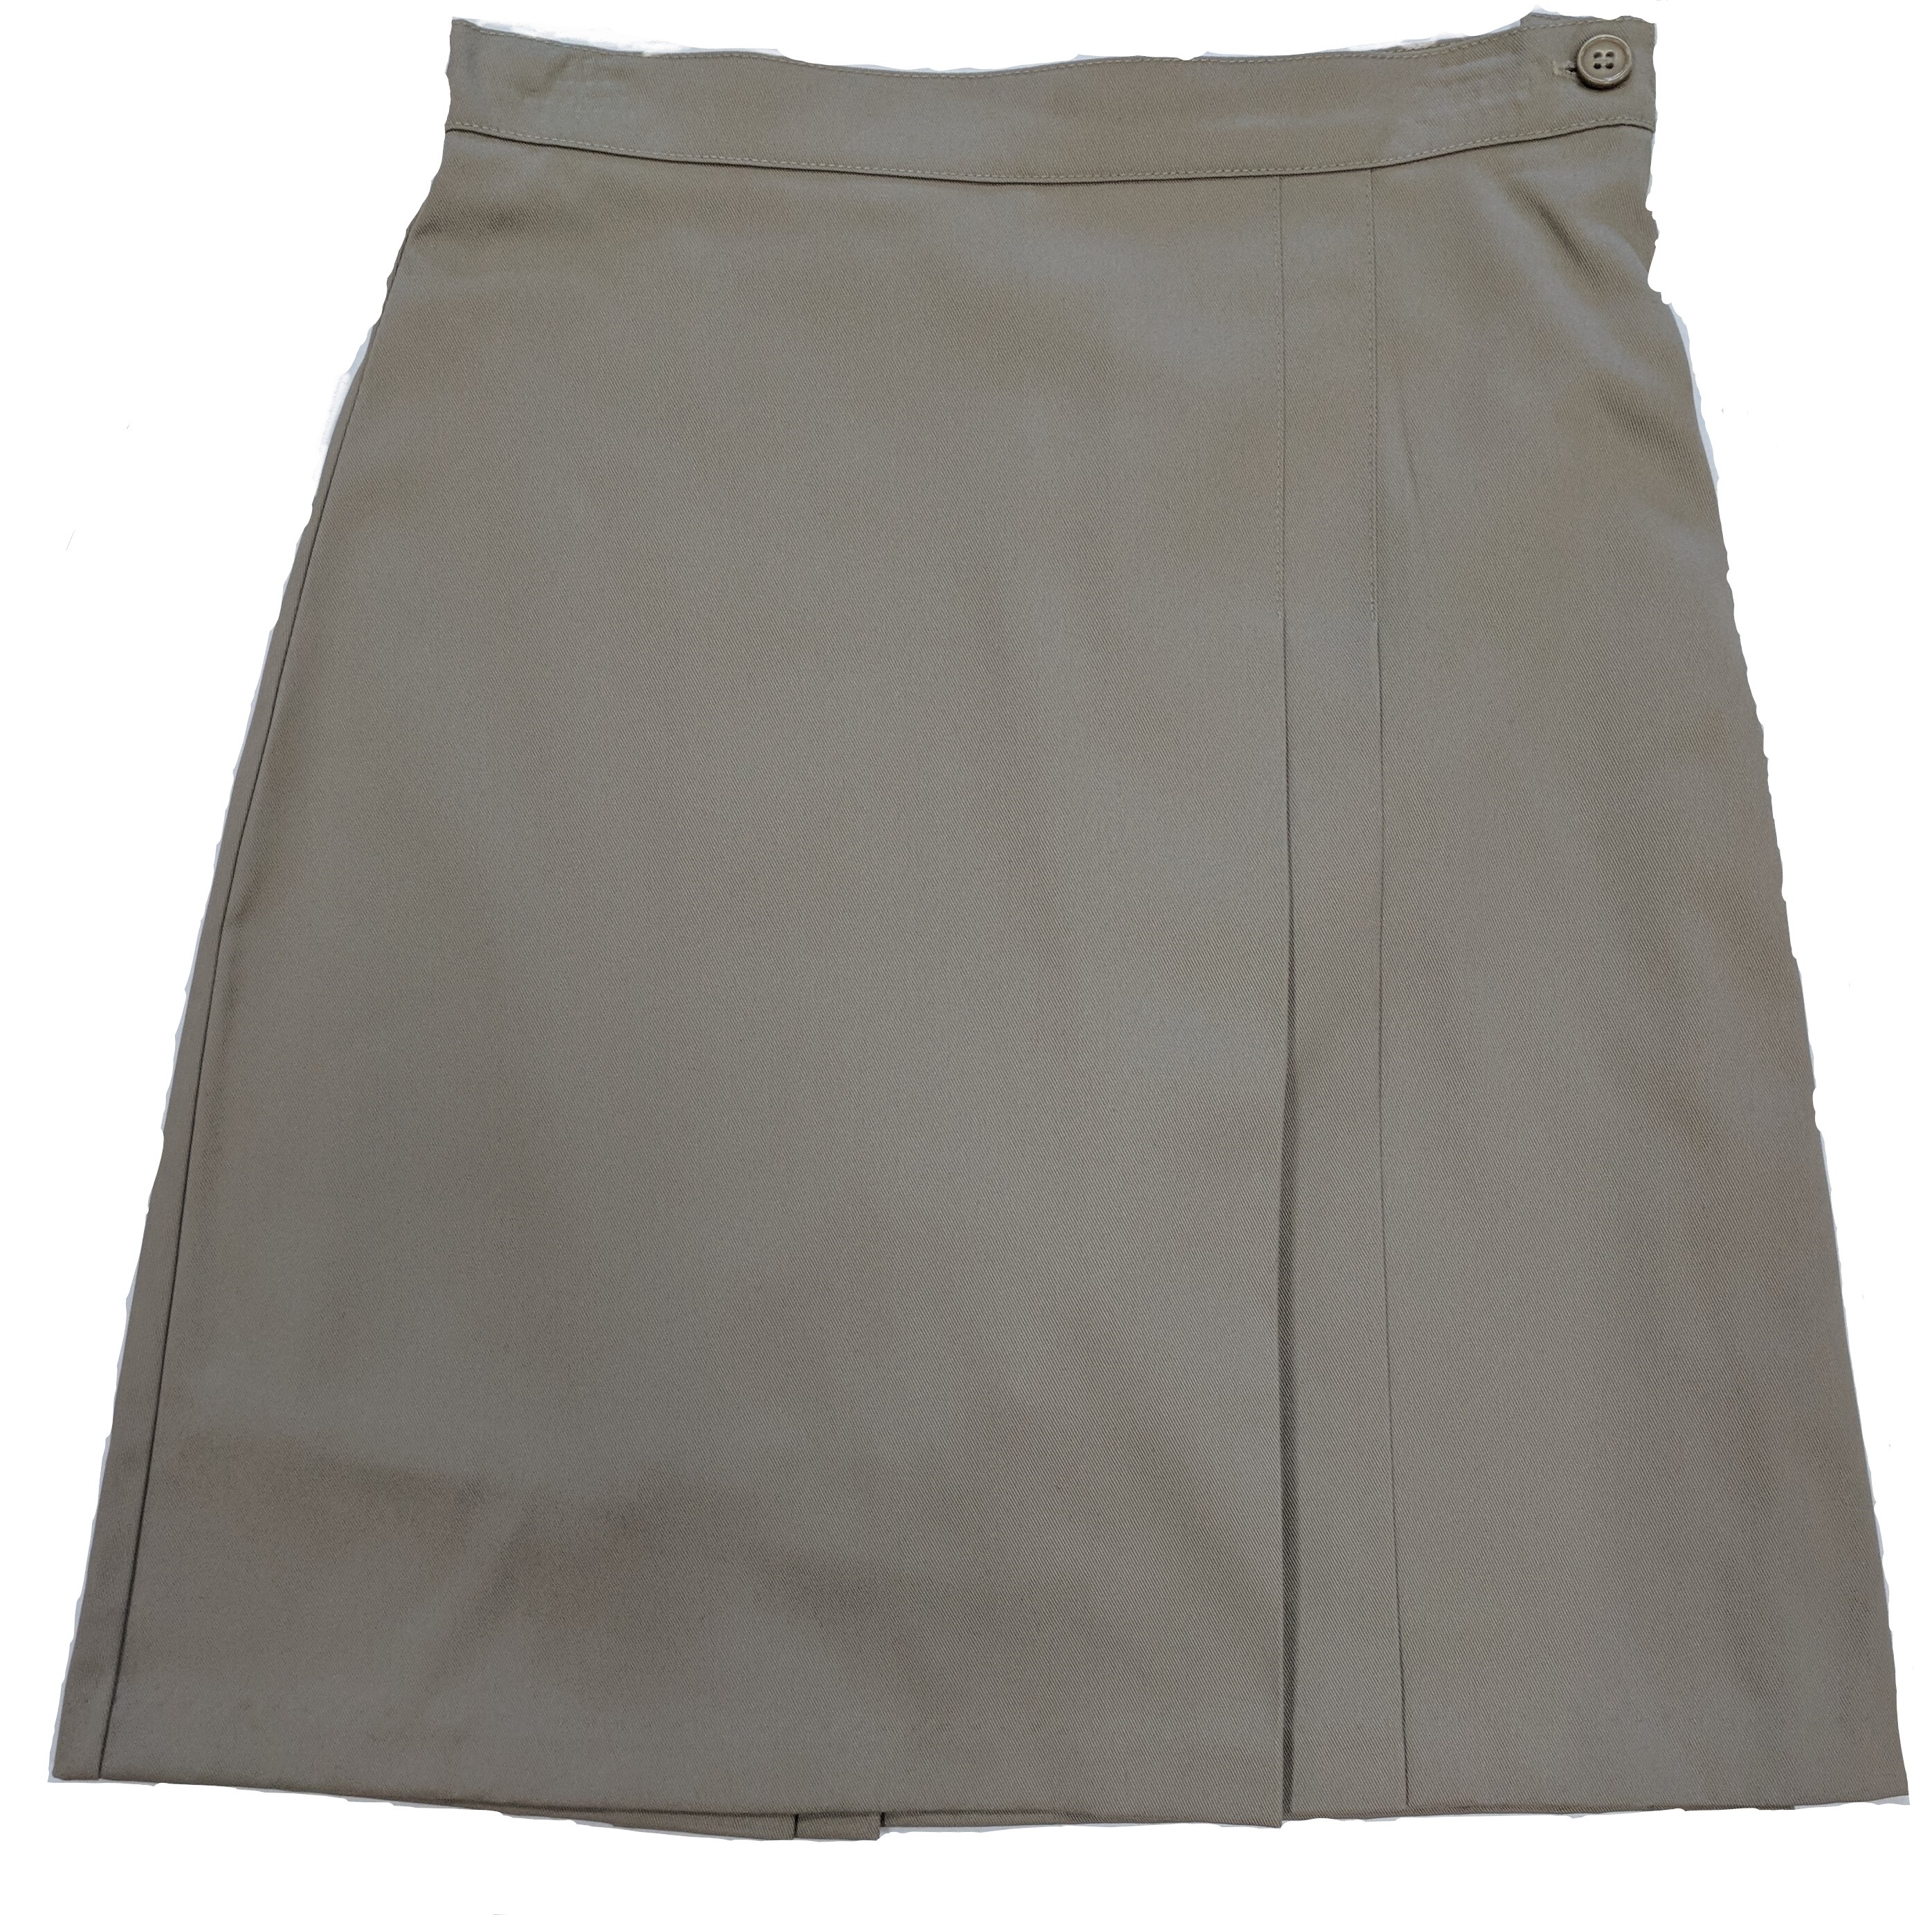 ESA-Girl's Khaki skort(size 8-20)